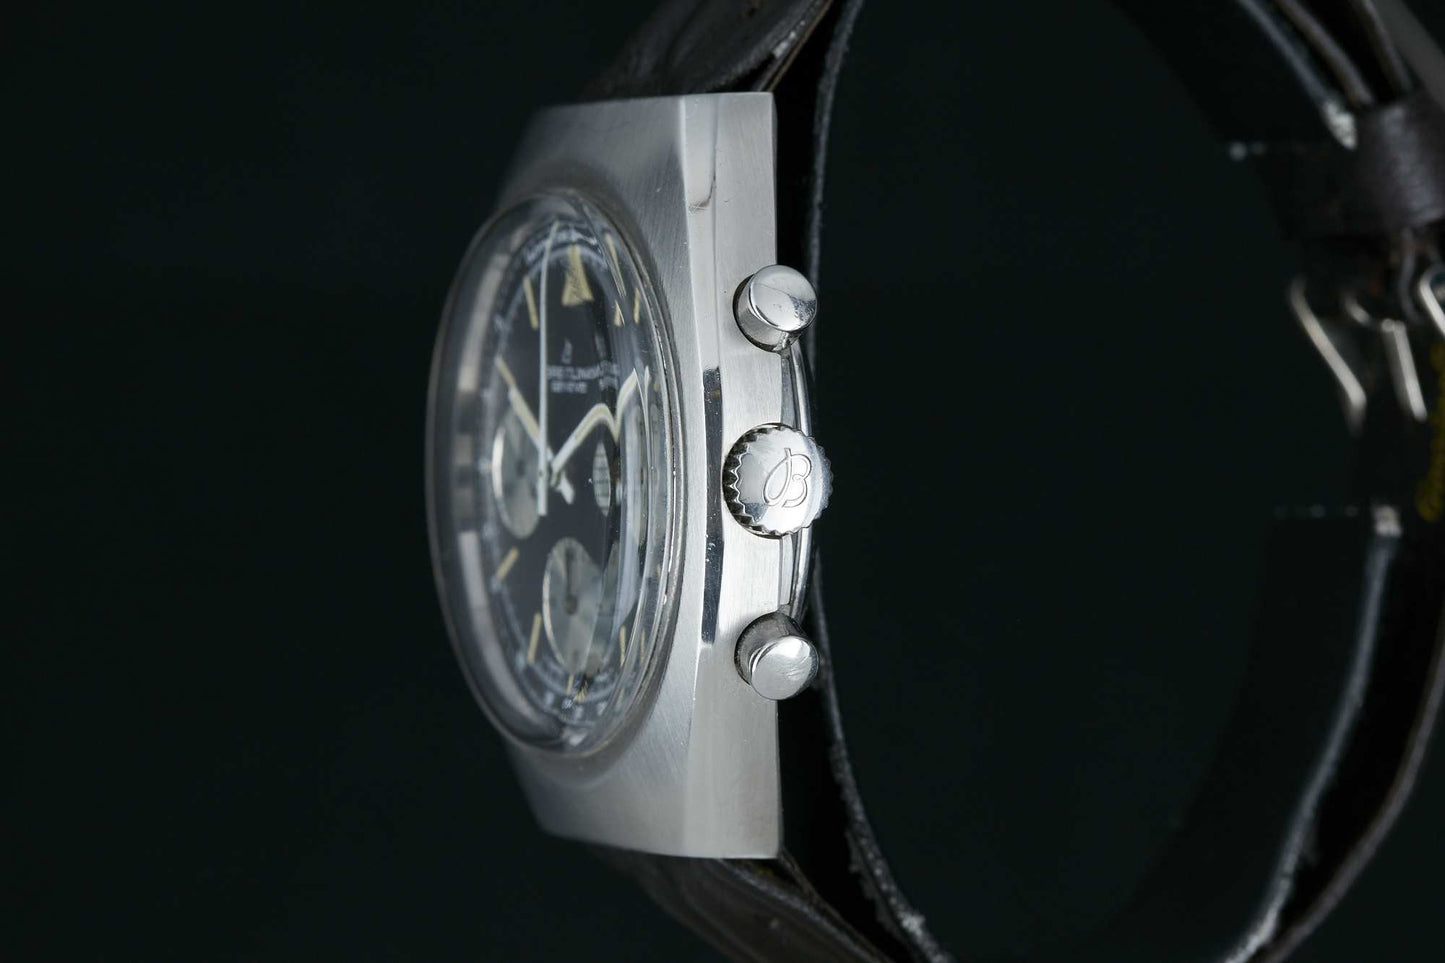 Breitling 1450 Chronograph